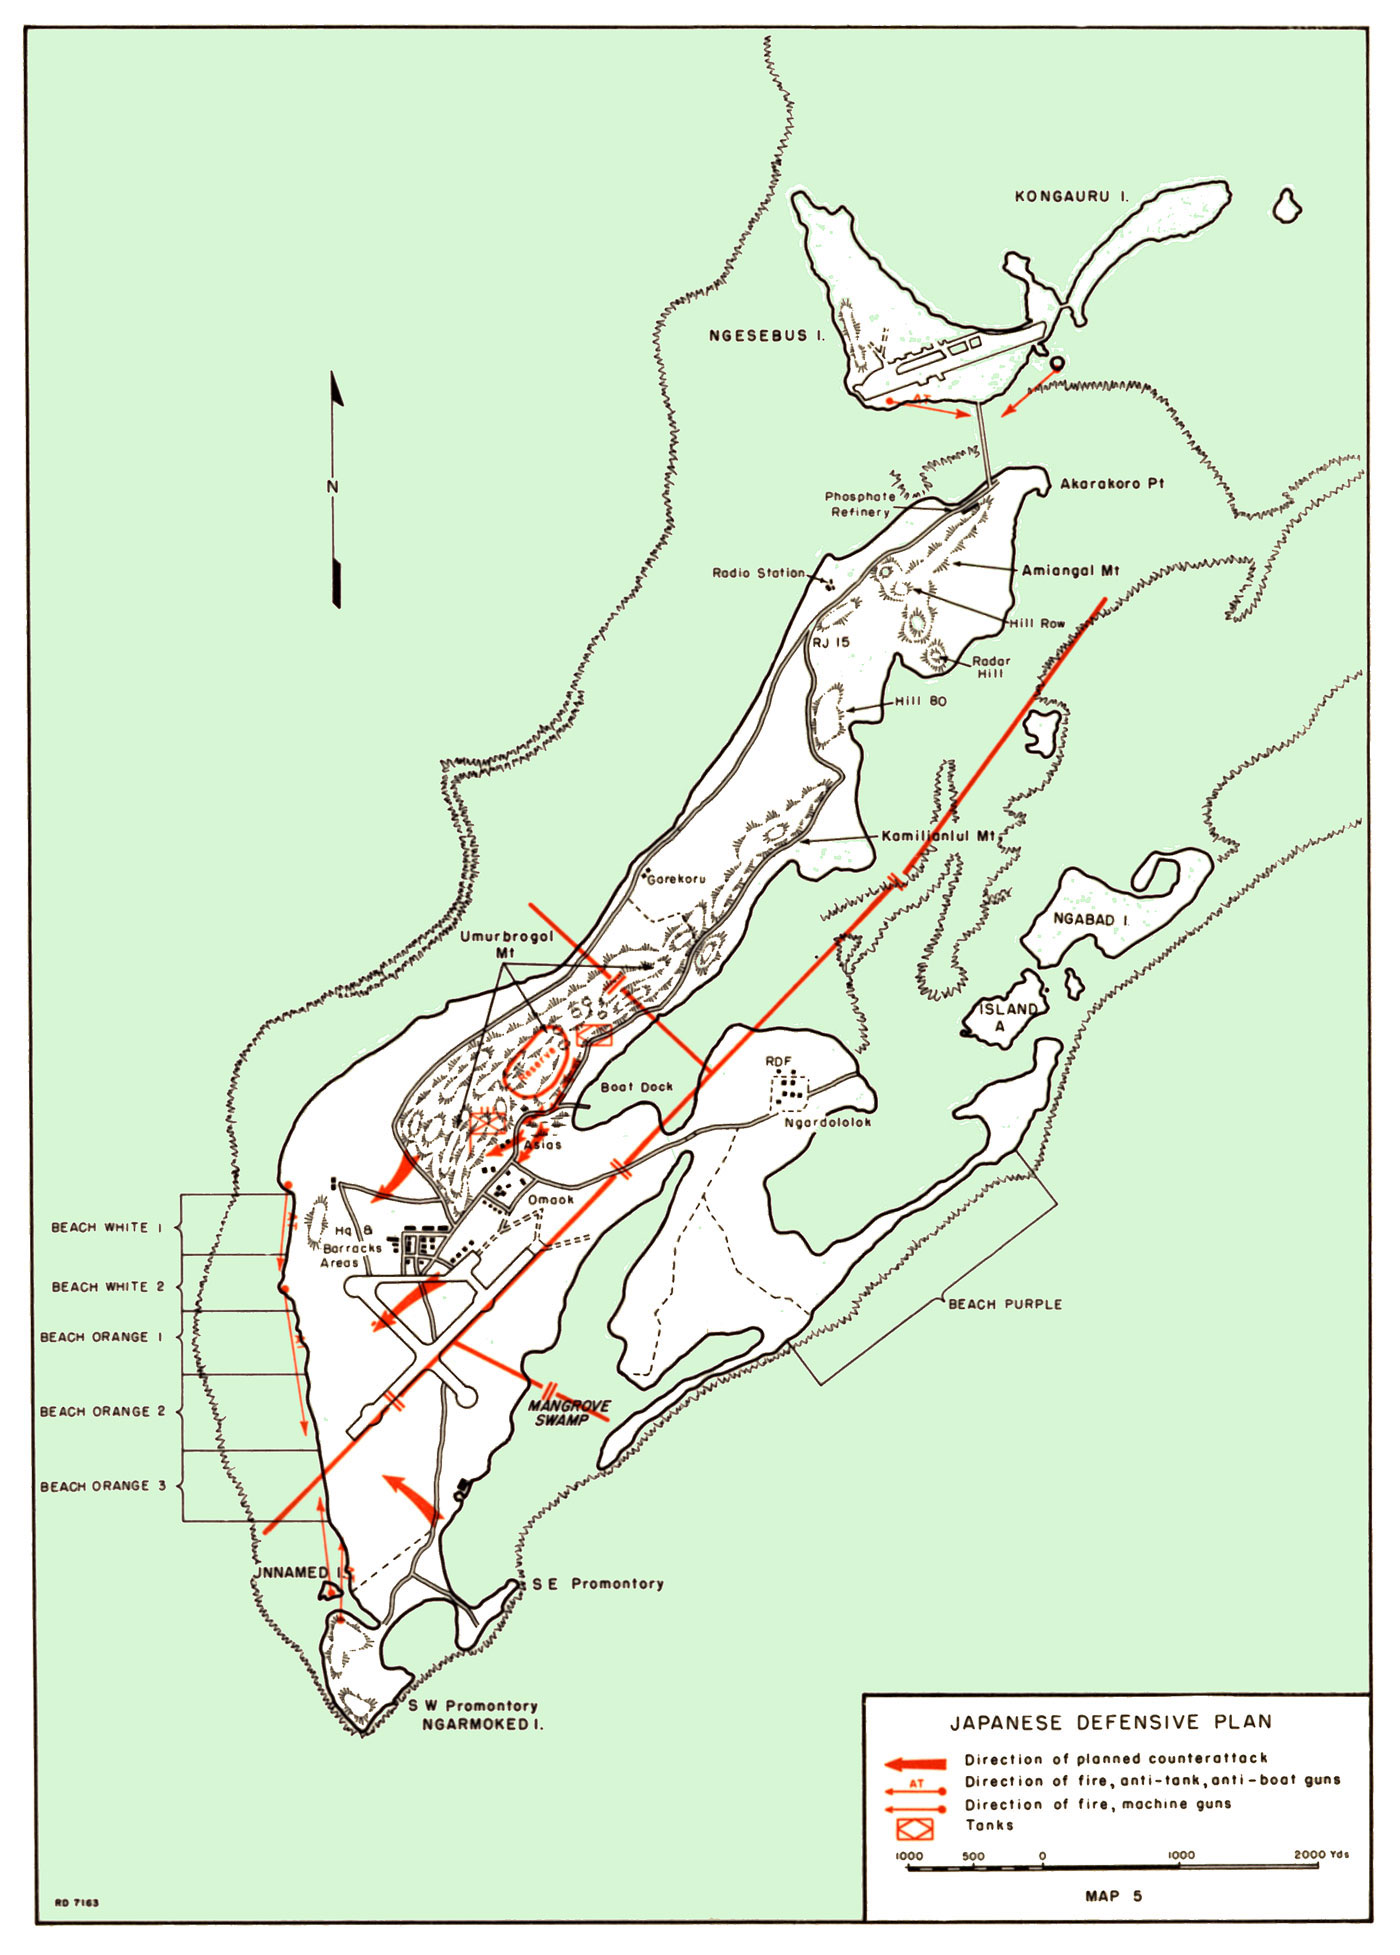 Map showing Japanese defensive plan at Peleliu